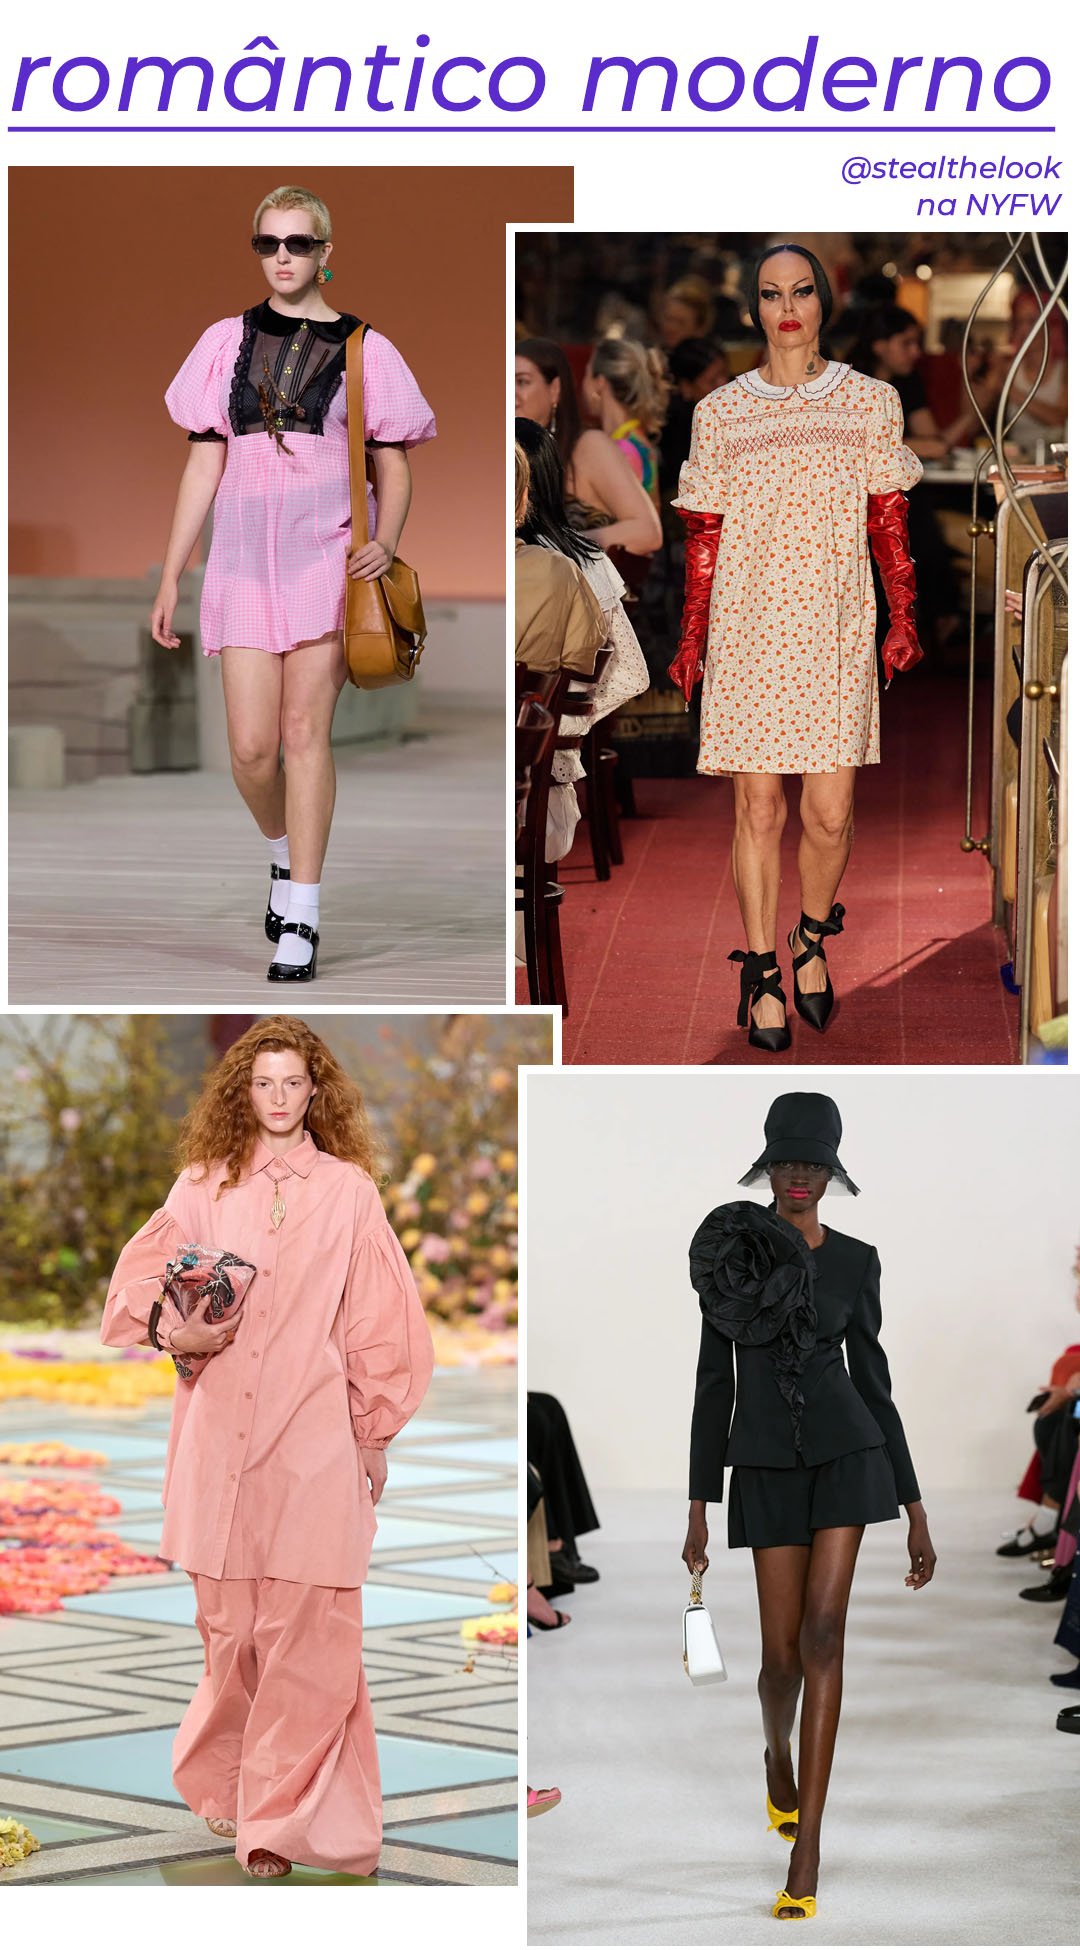 Coach - vestido rosa curto de mangas bufantes e óculos de sol - tendências de moda - Primavera - modelo andando pela passarela - https://stealthelook.com.br